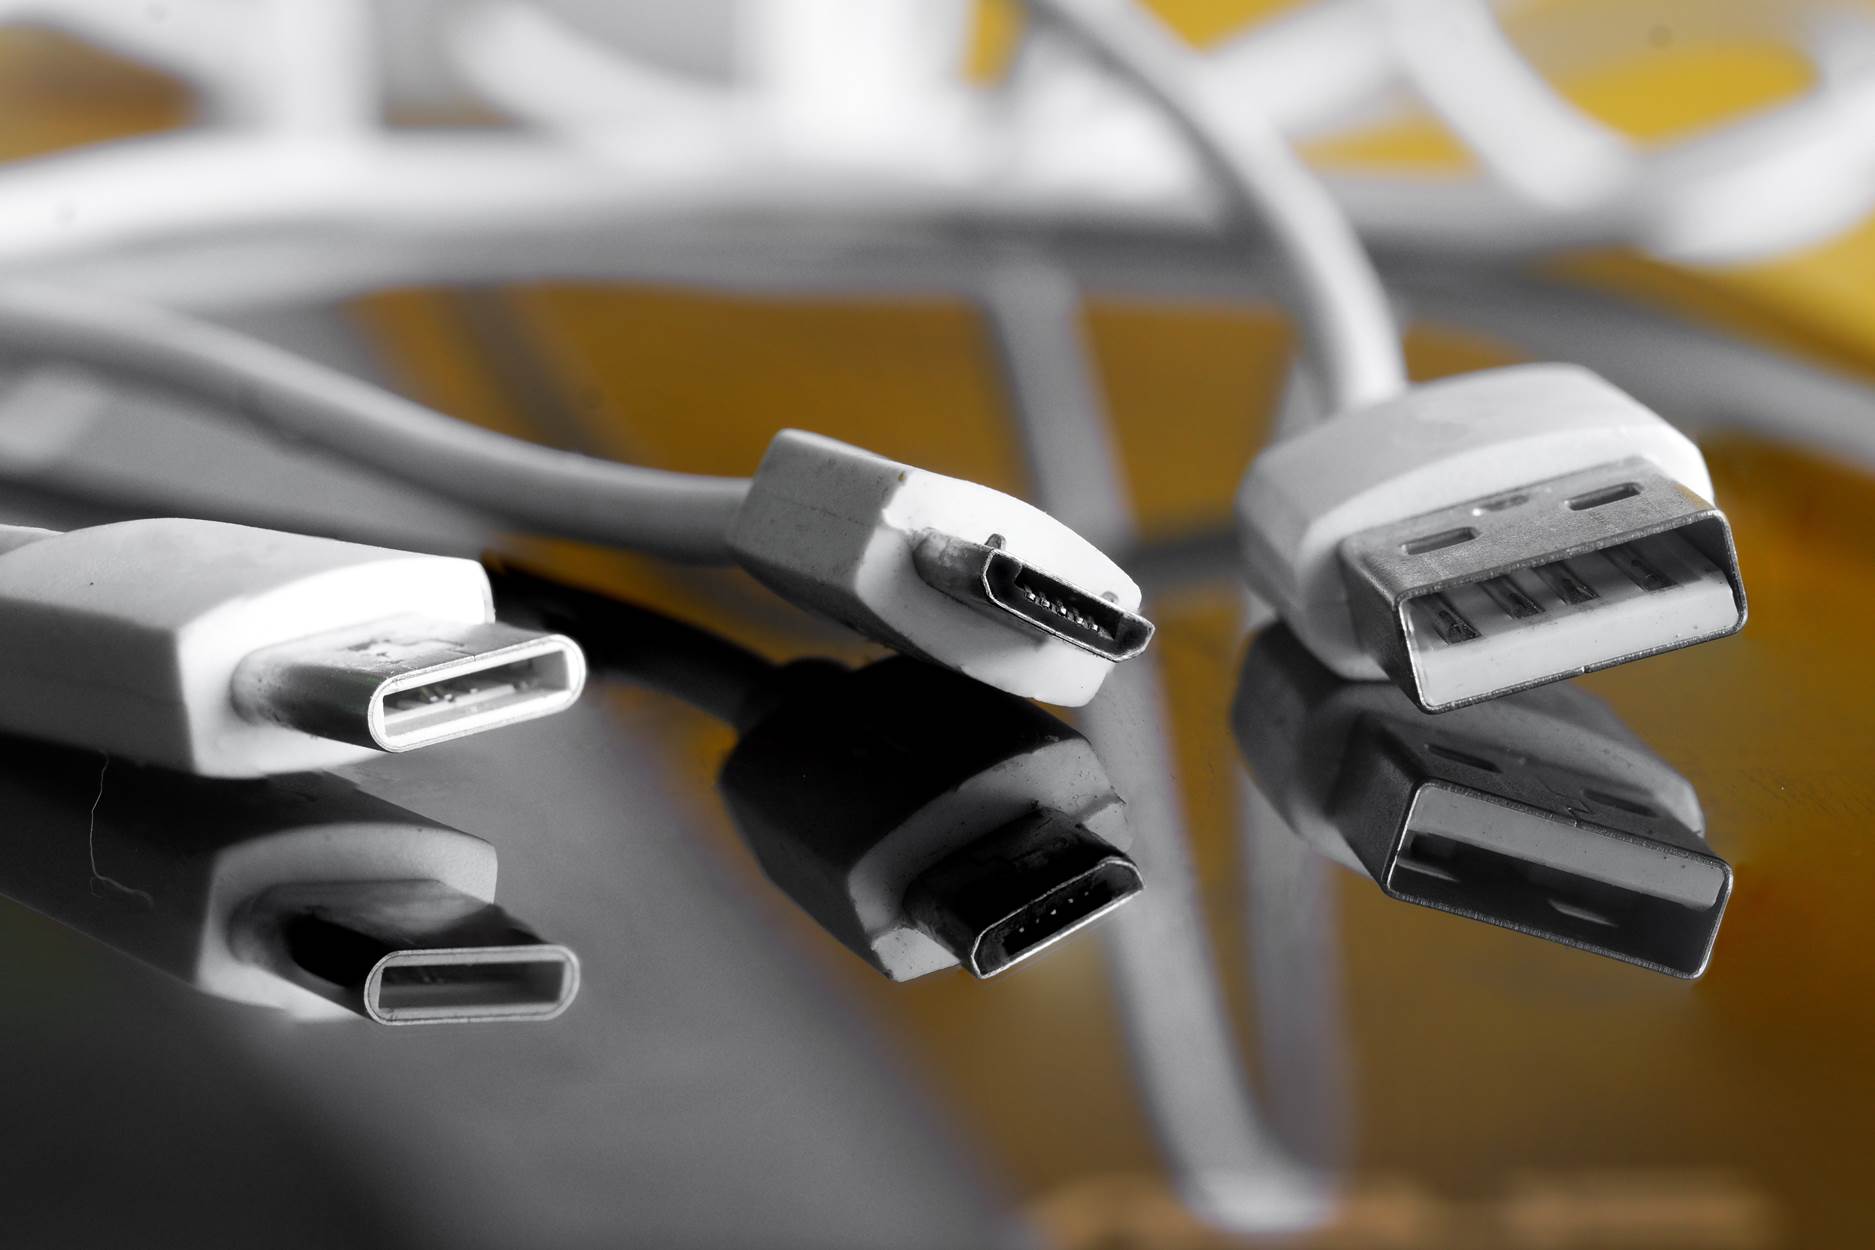 2024年起歐盟充電器將統一規格EU to require all smartphones to use USB-C charger by 2024